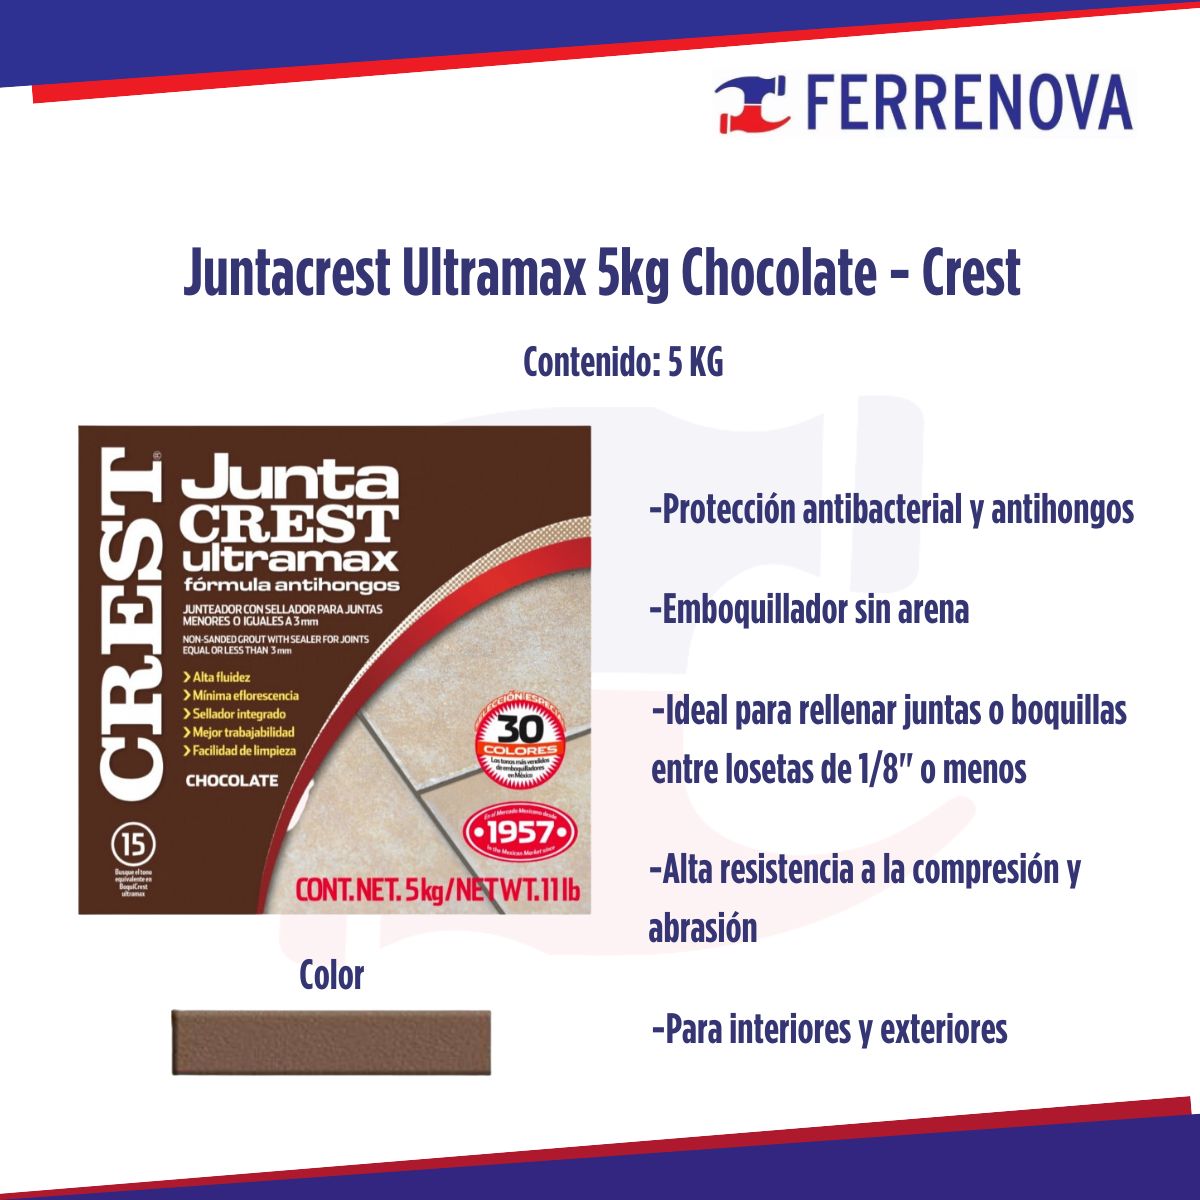 Juntacrest Ultramax 5kg Chocolate - Crest